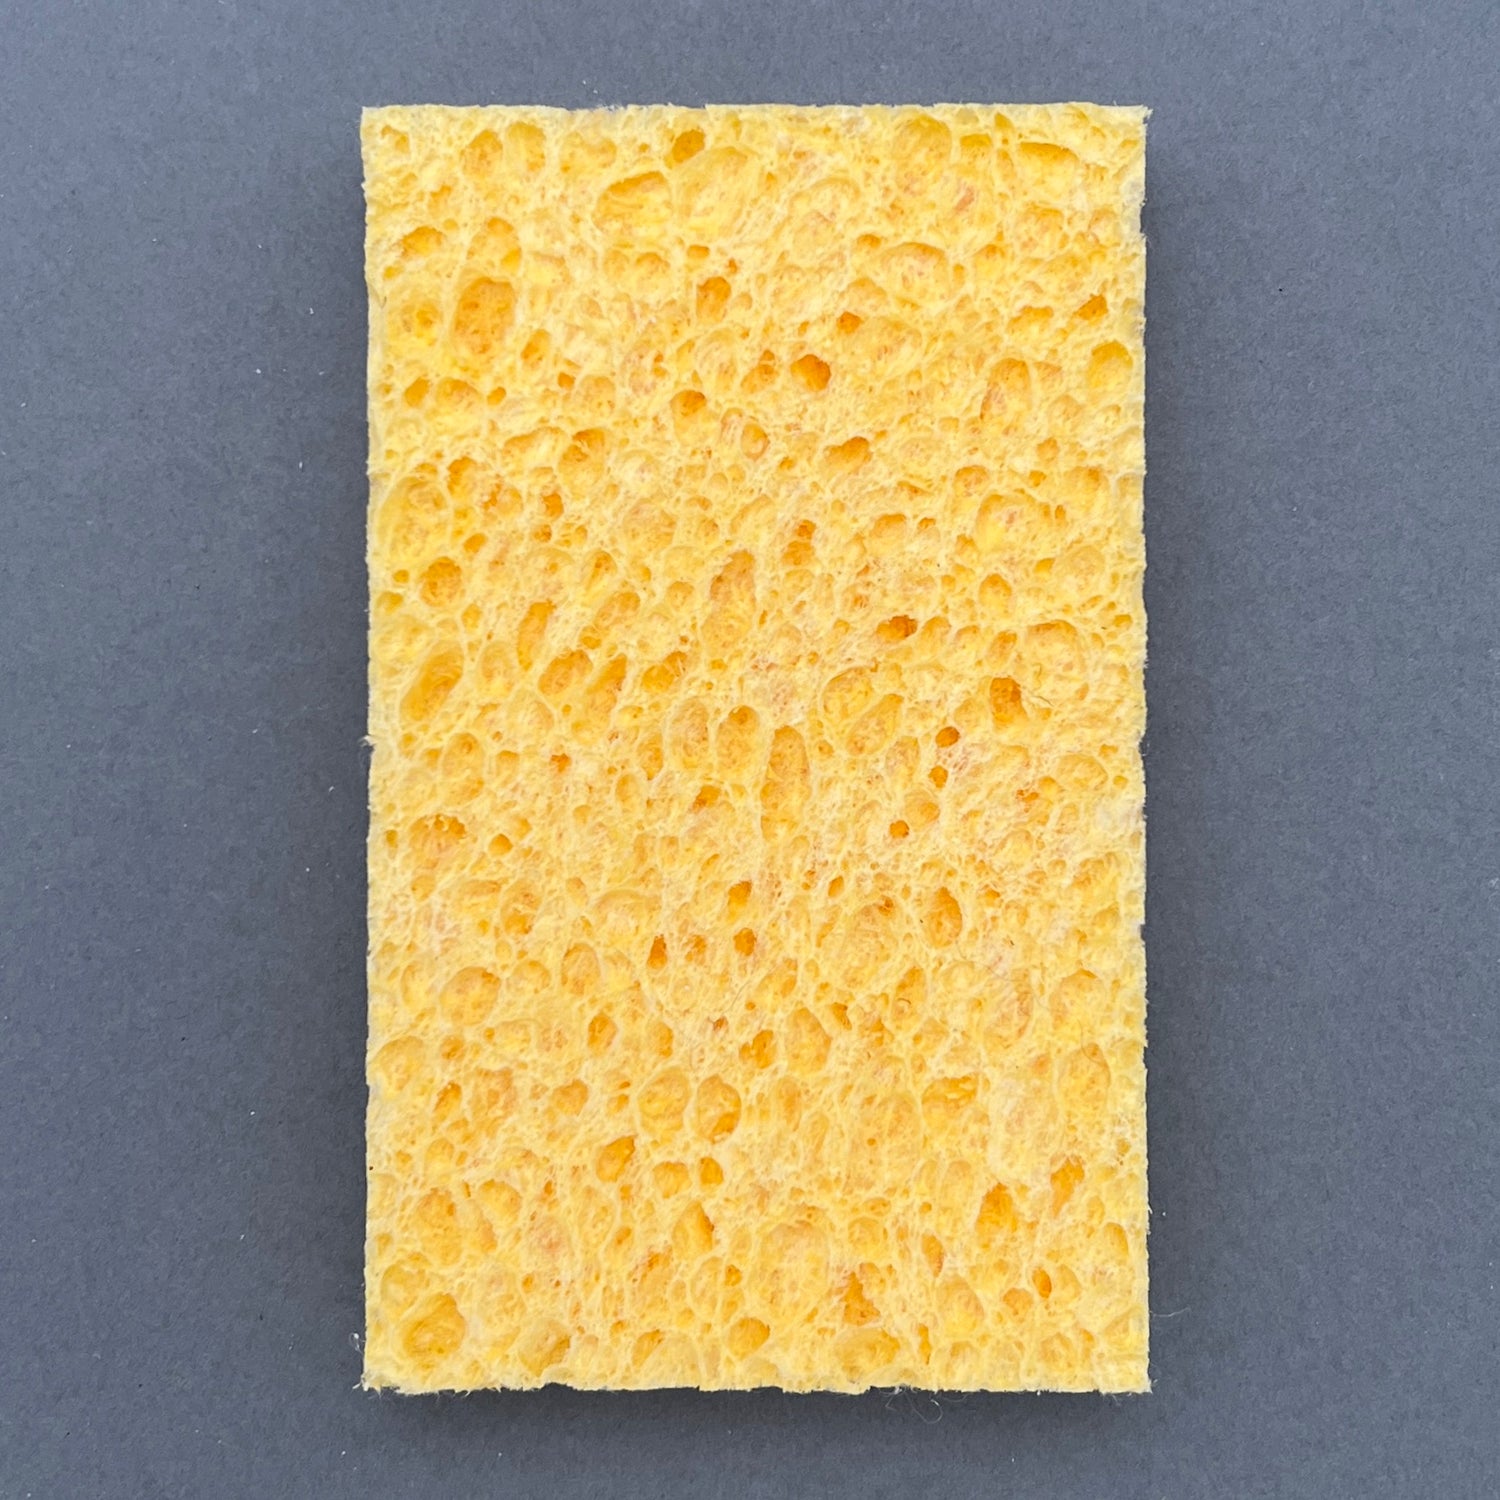 The backside of a rectangular kitchen sponge